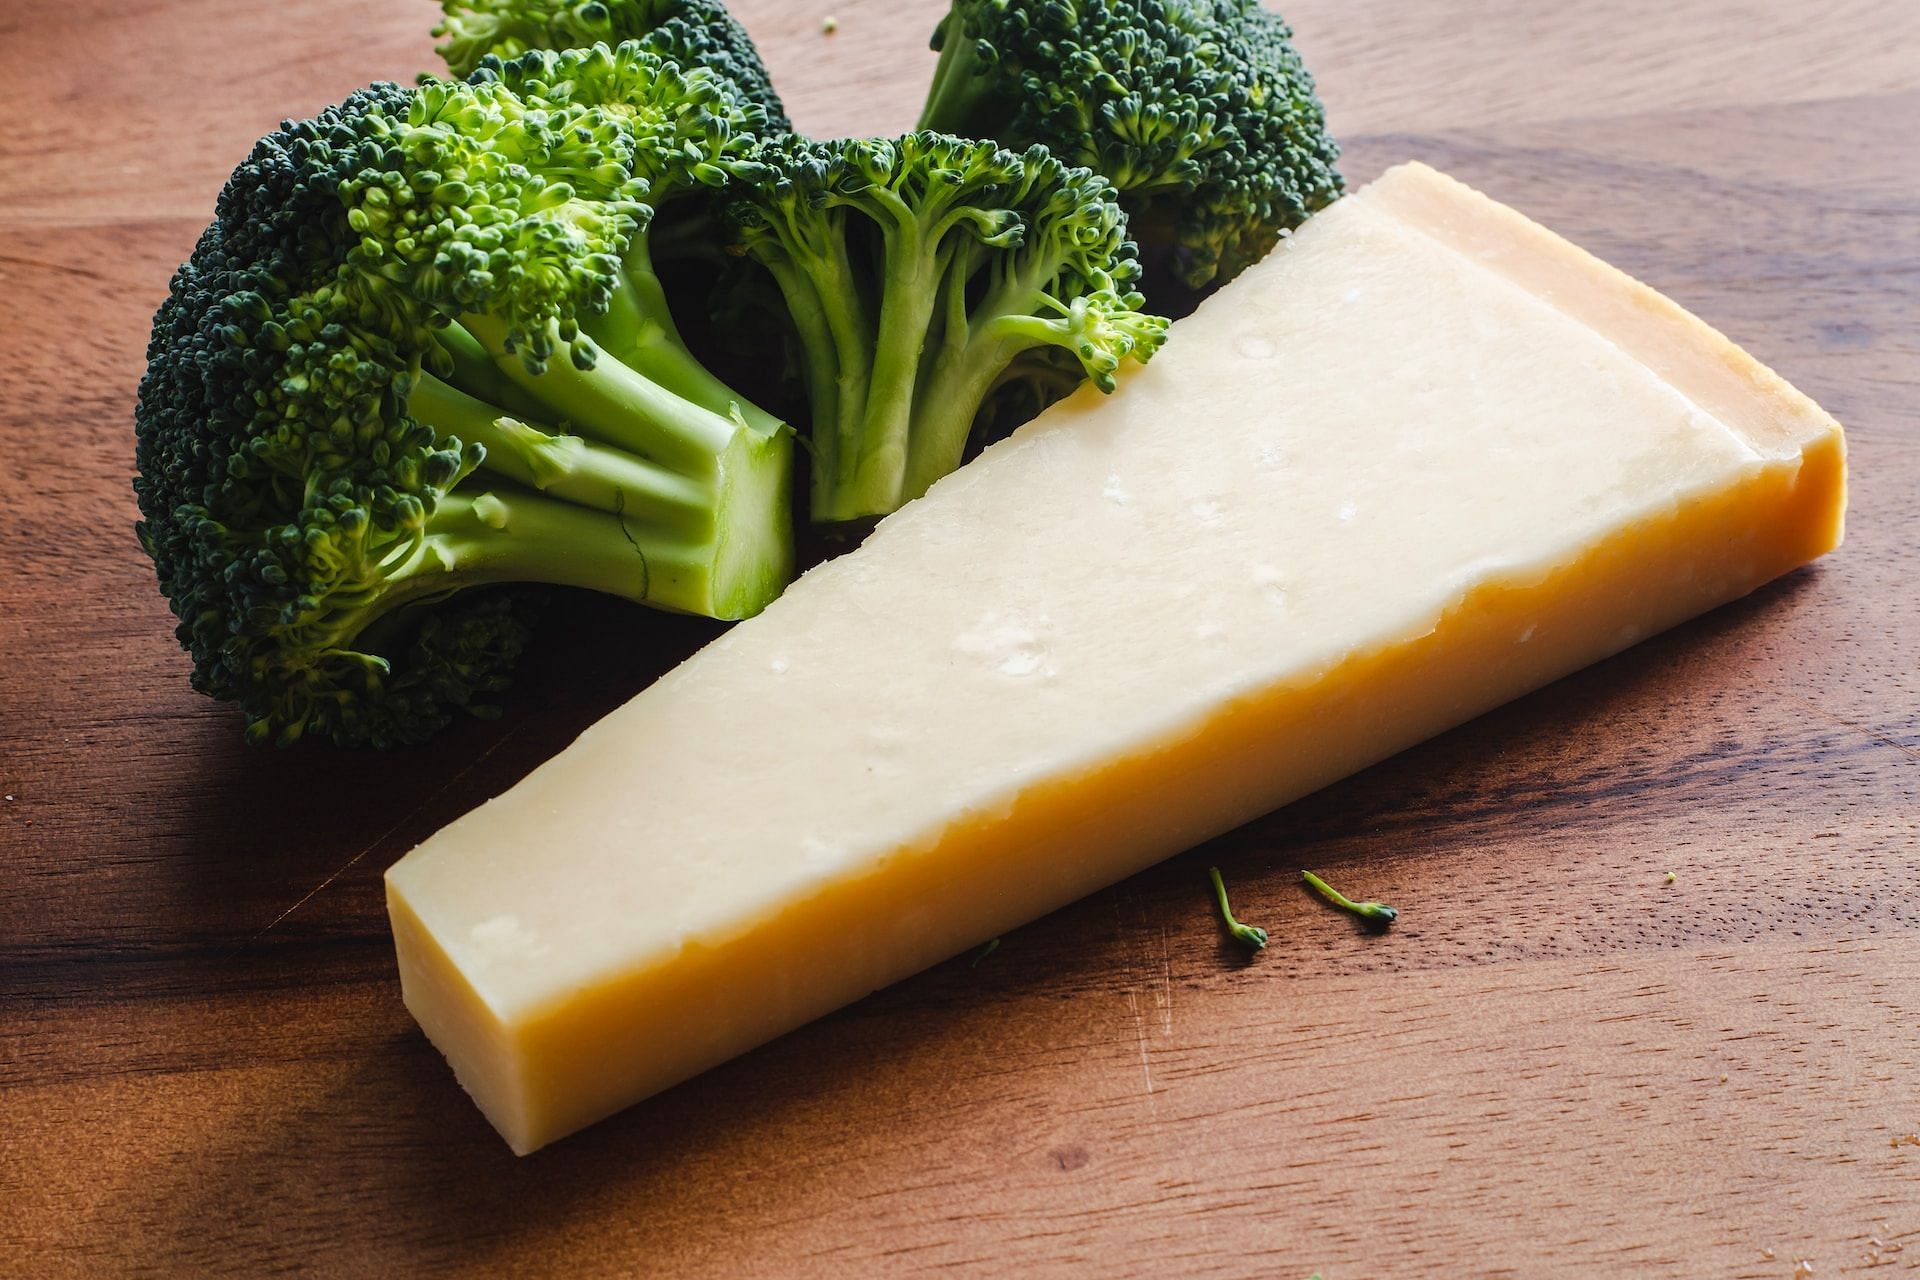 Broccoli with cheese. (Image credits: Unsplash/ Louis Hansel)